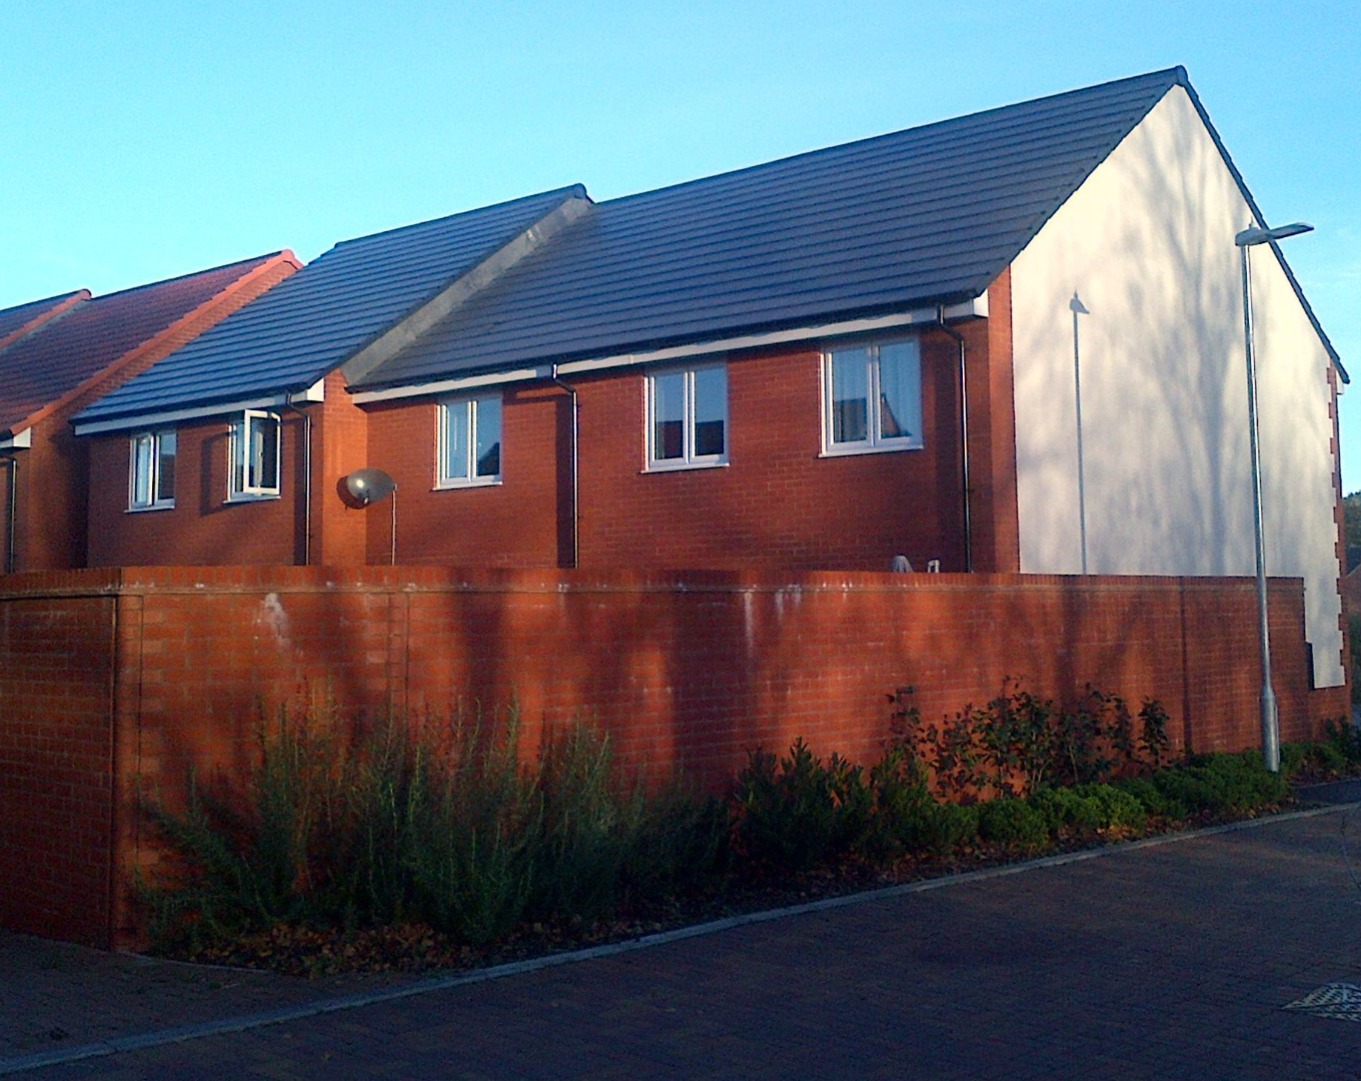 Slate roof on new build housing in Gloucester